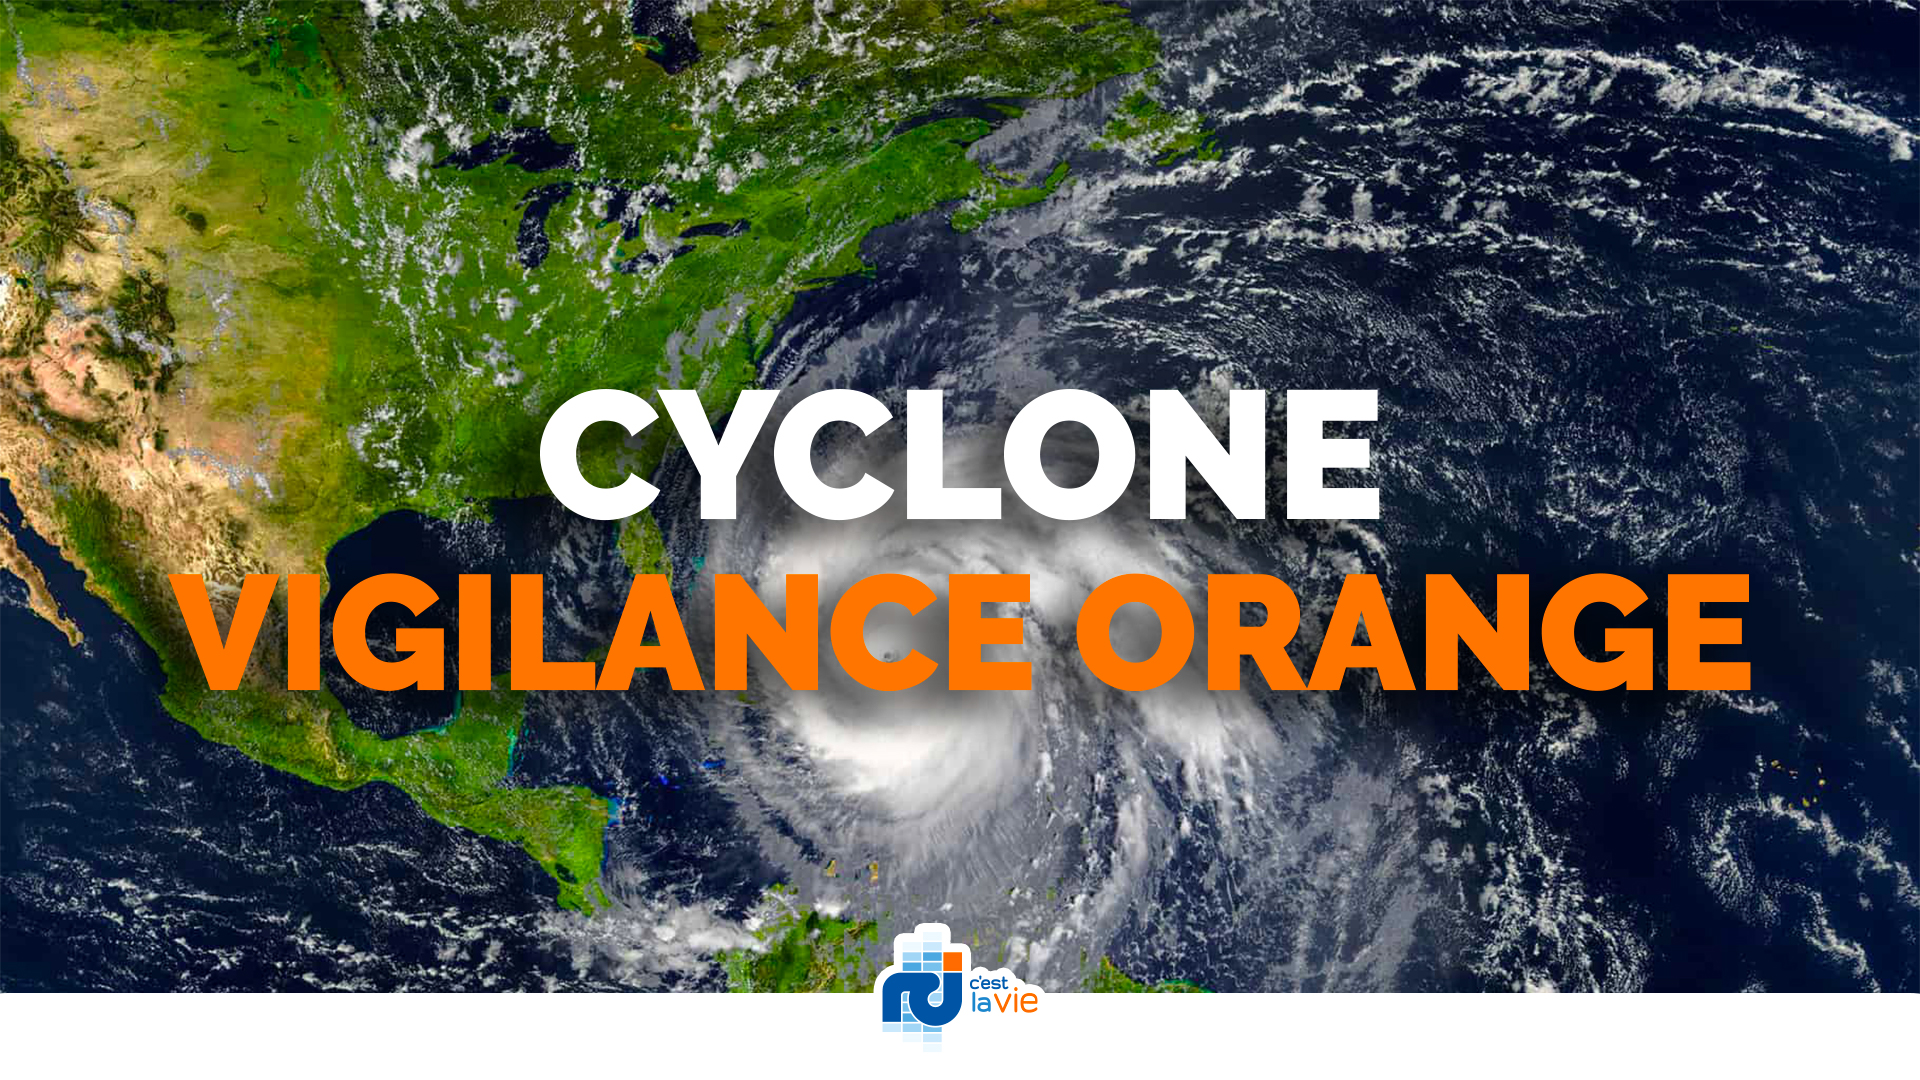     Vigilance orange cyclone : la Martinique dans la trajectoire de vent fort

